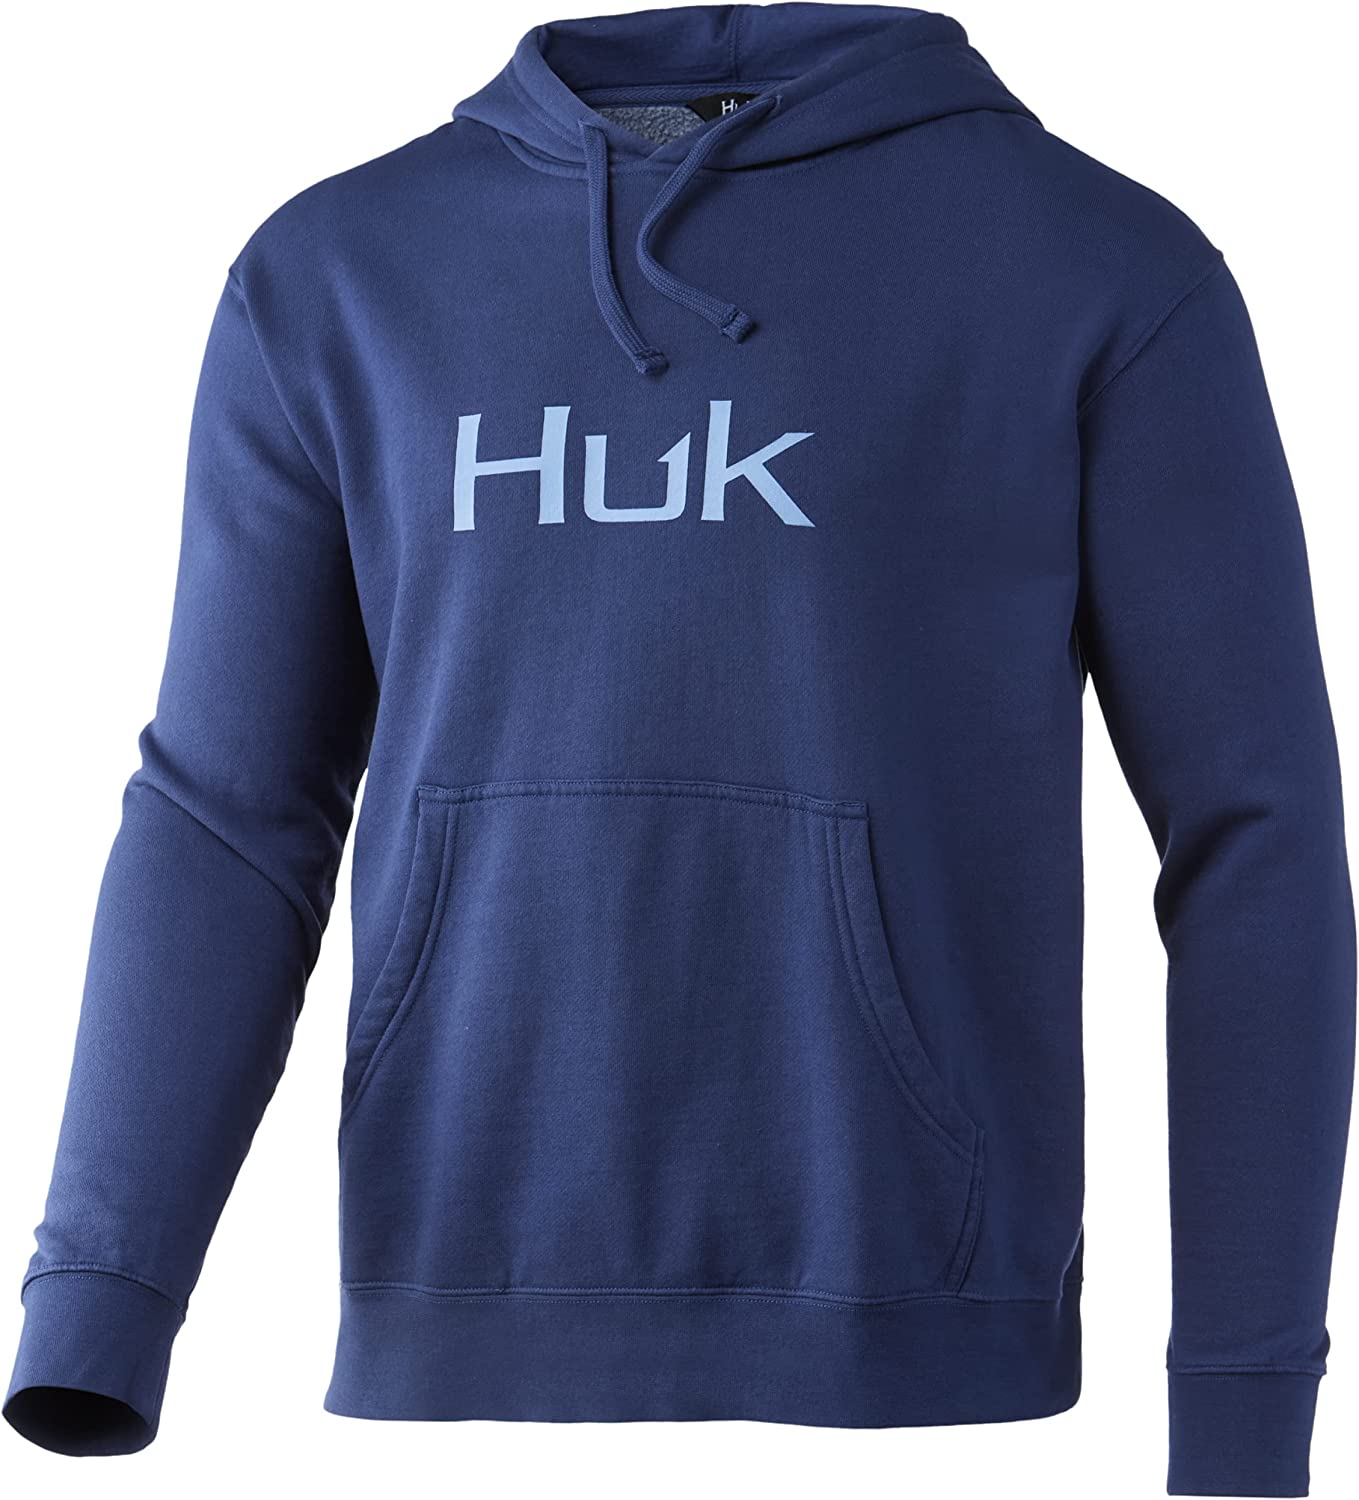 HUK Men's Standard Boonie Wide Brim Fishing Hat UPF 30+ Sun Protection, Titanium Blue, One Size